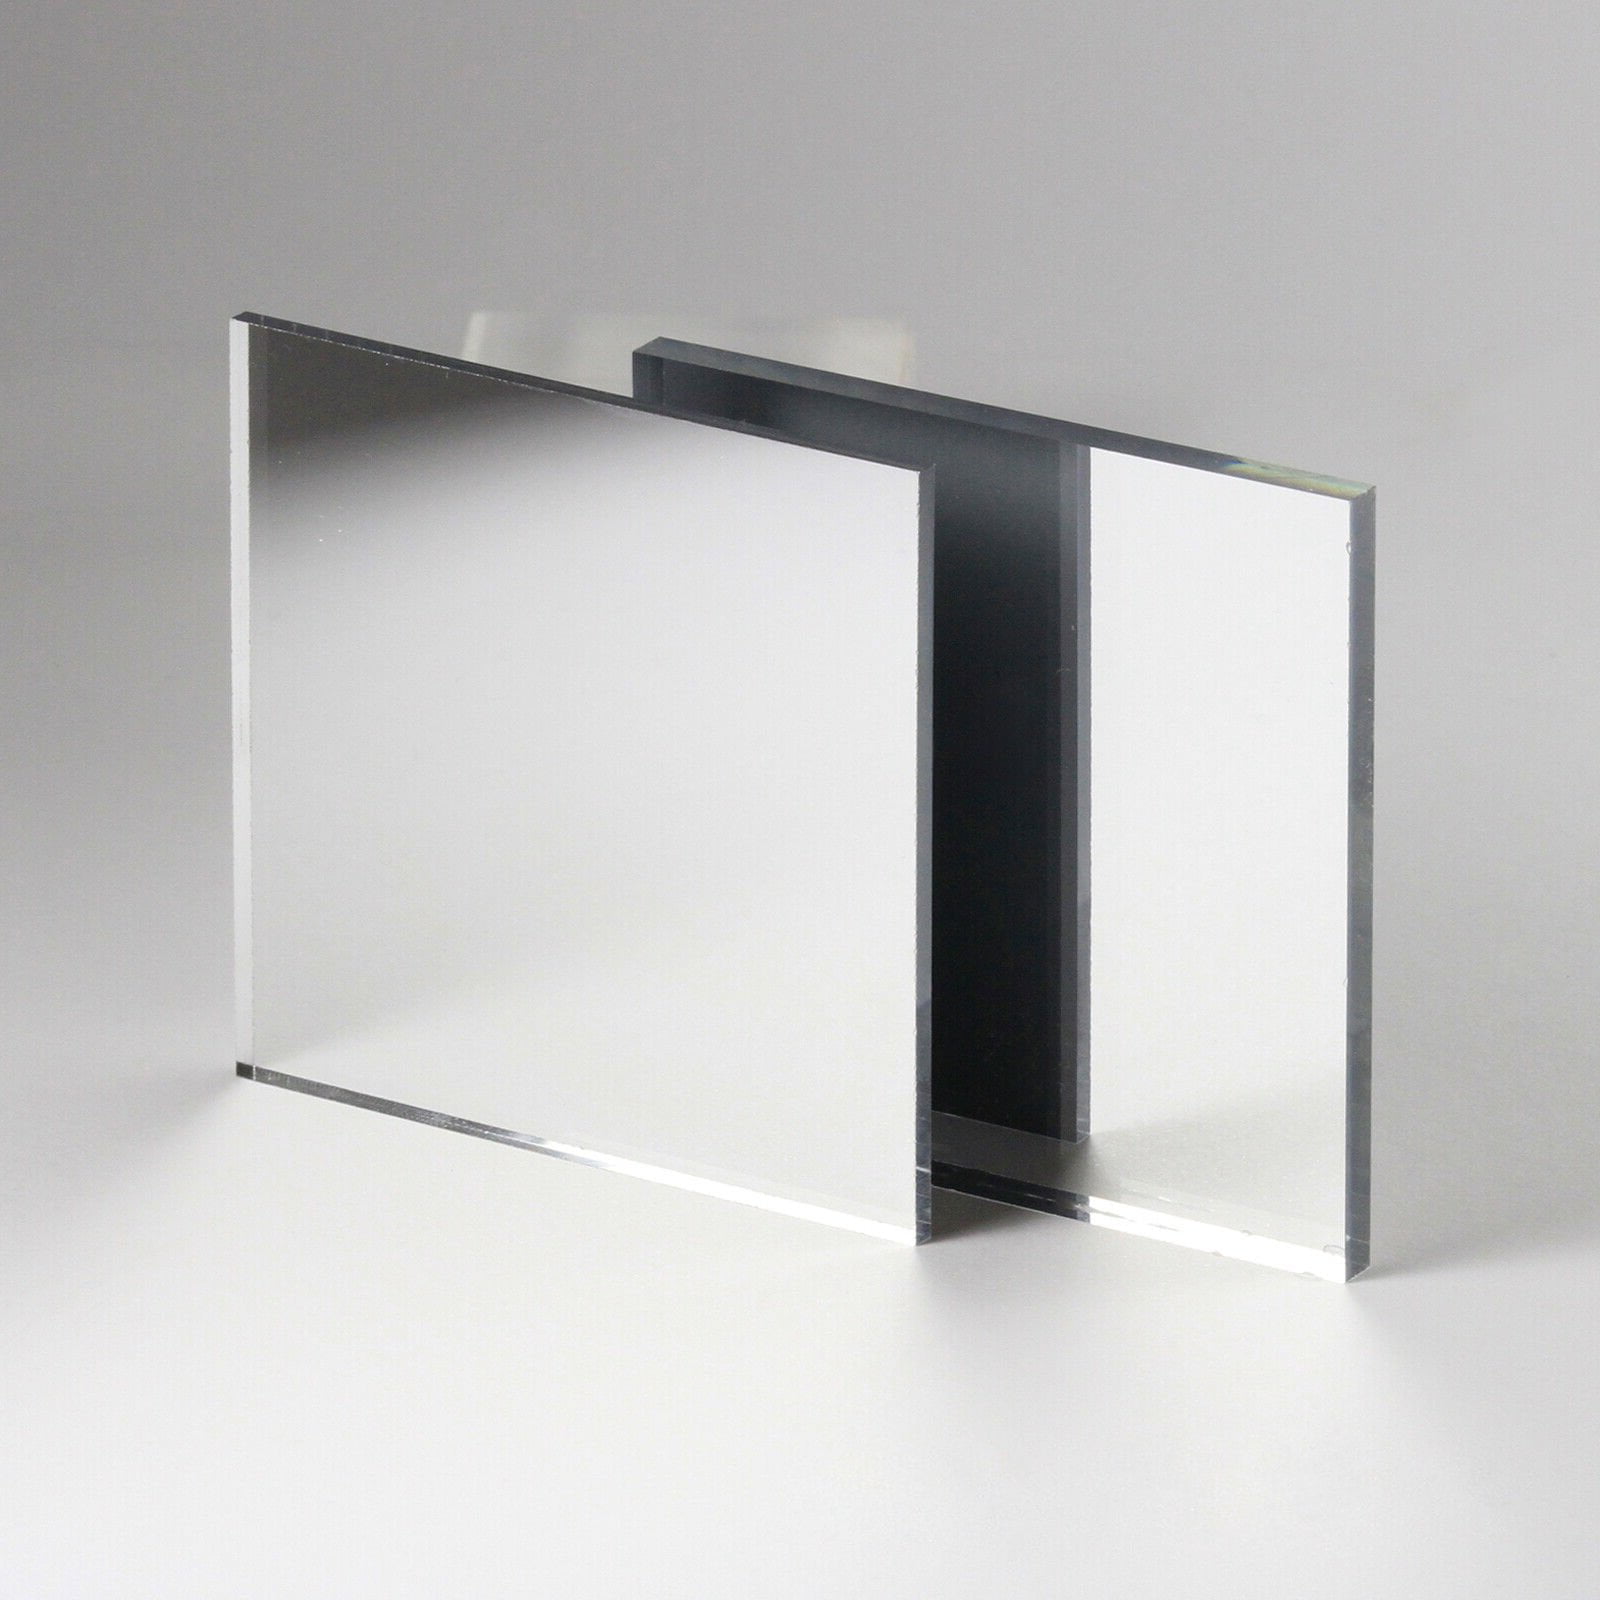 Plastic-Craft  Acrylic Mirror Sheet - Reflective & Durable